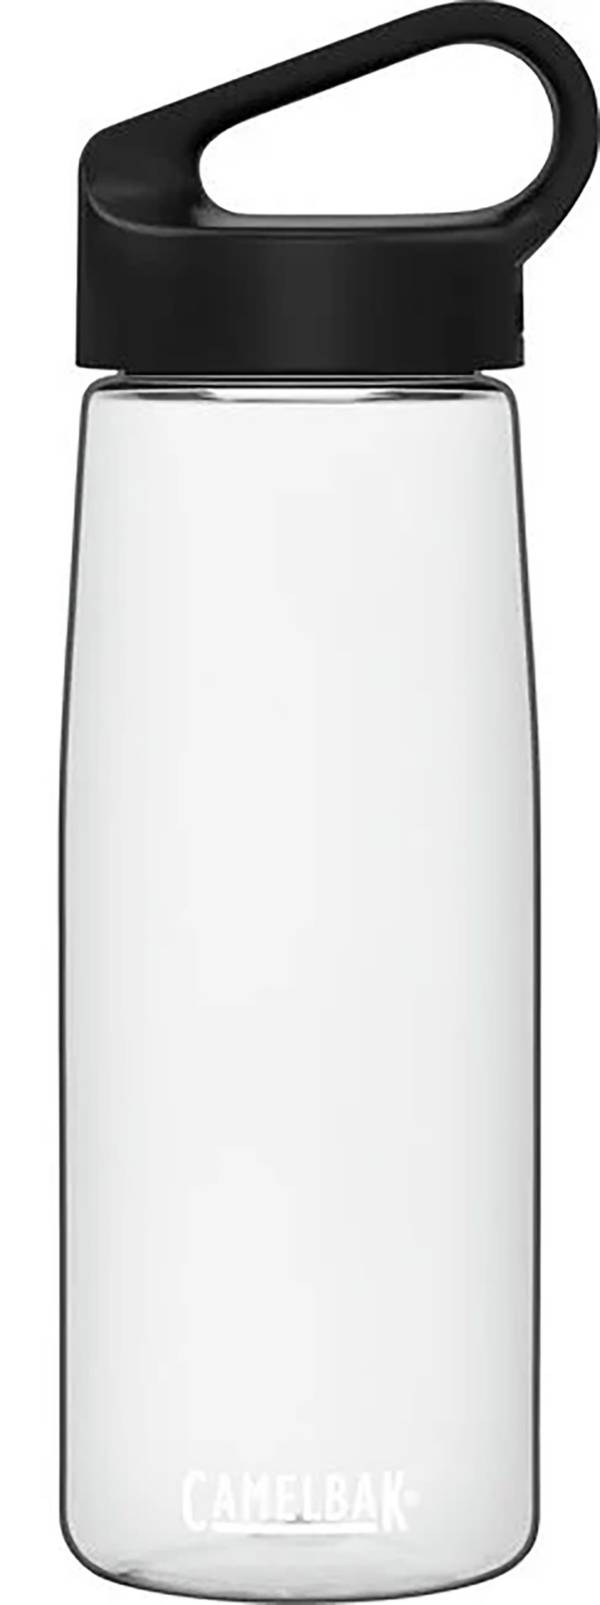 CamelBak Carry Cap 25 Oz. Water Bottle product image